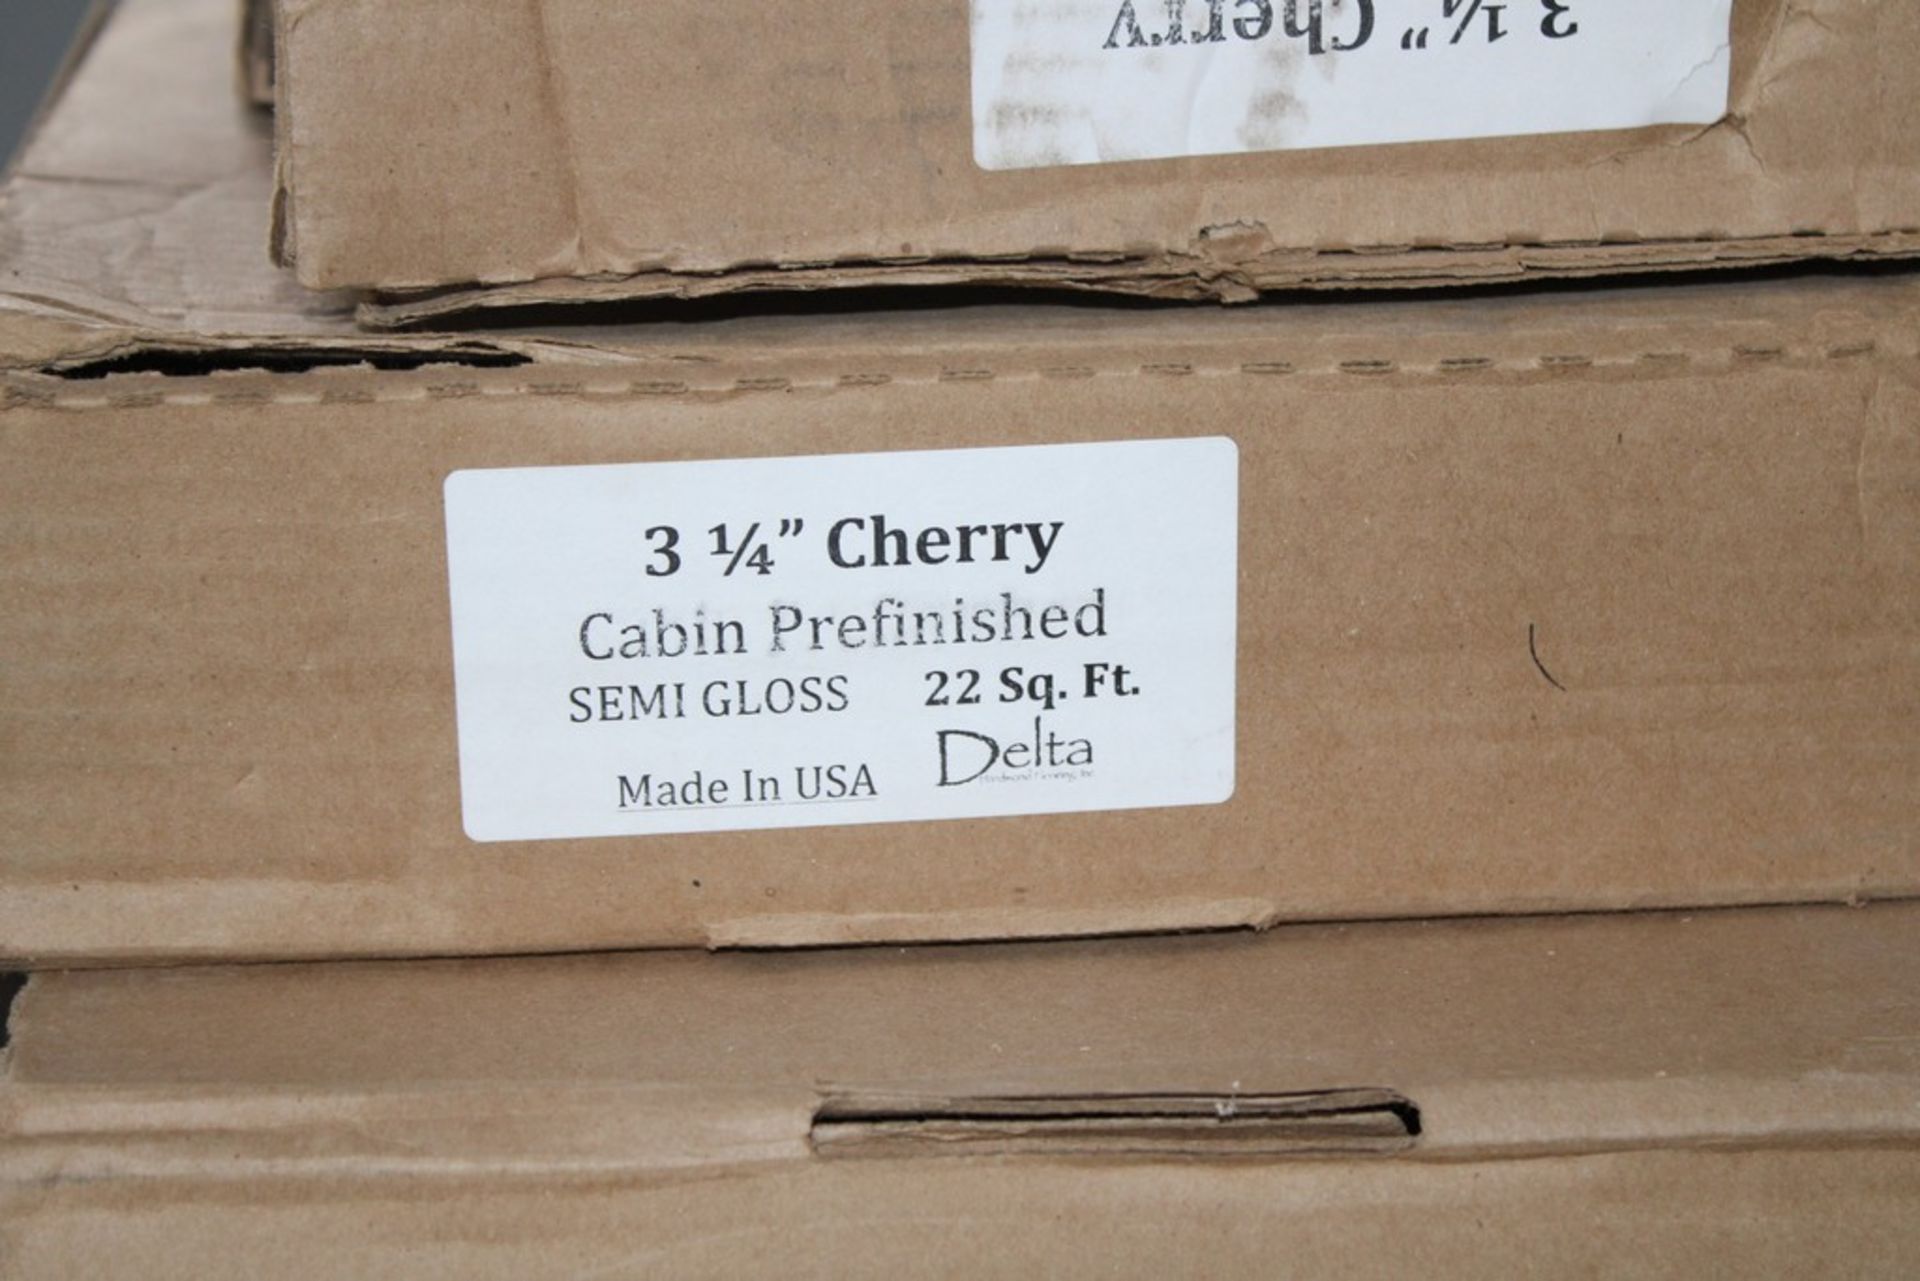 (48) BOXES OF 3-1/4" DELTA CHERRY PREFINISHED FLOORING, 22 SQ. FT. PER BOX, SEMI-GLOSS FINISH - Image 2 of 2